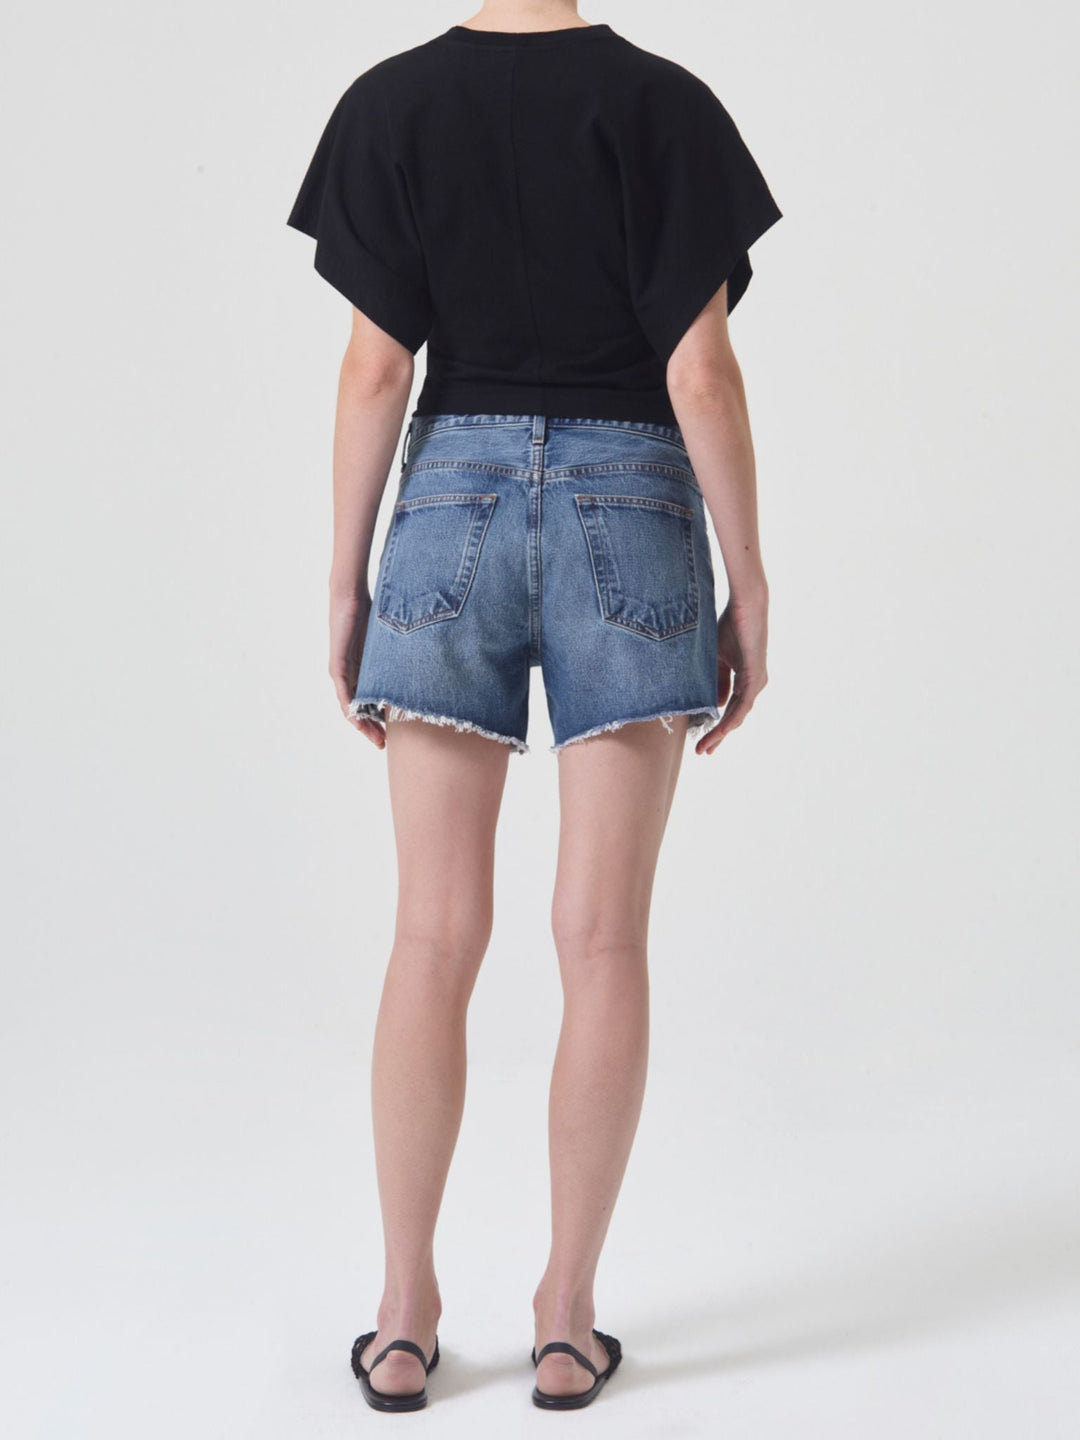 AGOLDE Ruin Parker Long ShortDenim Shorts/Skirts